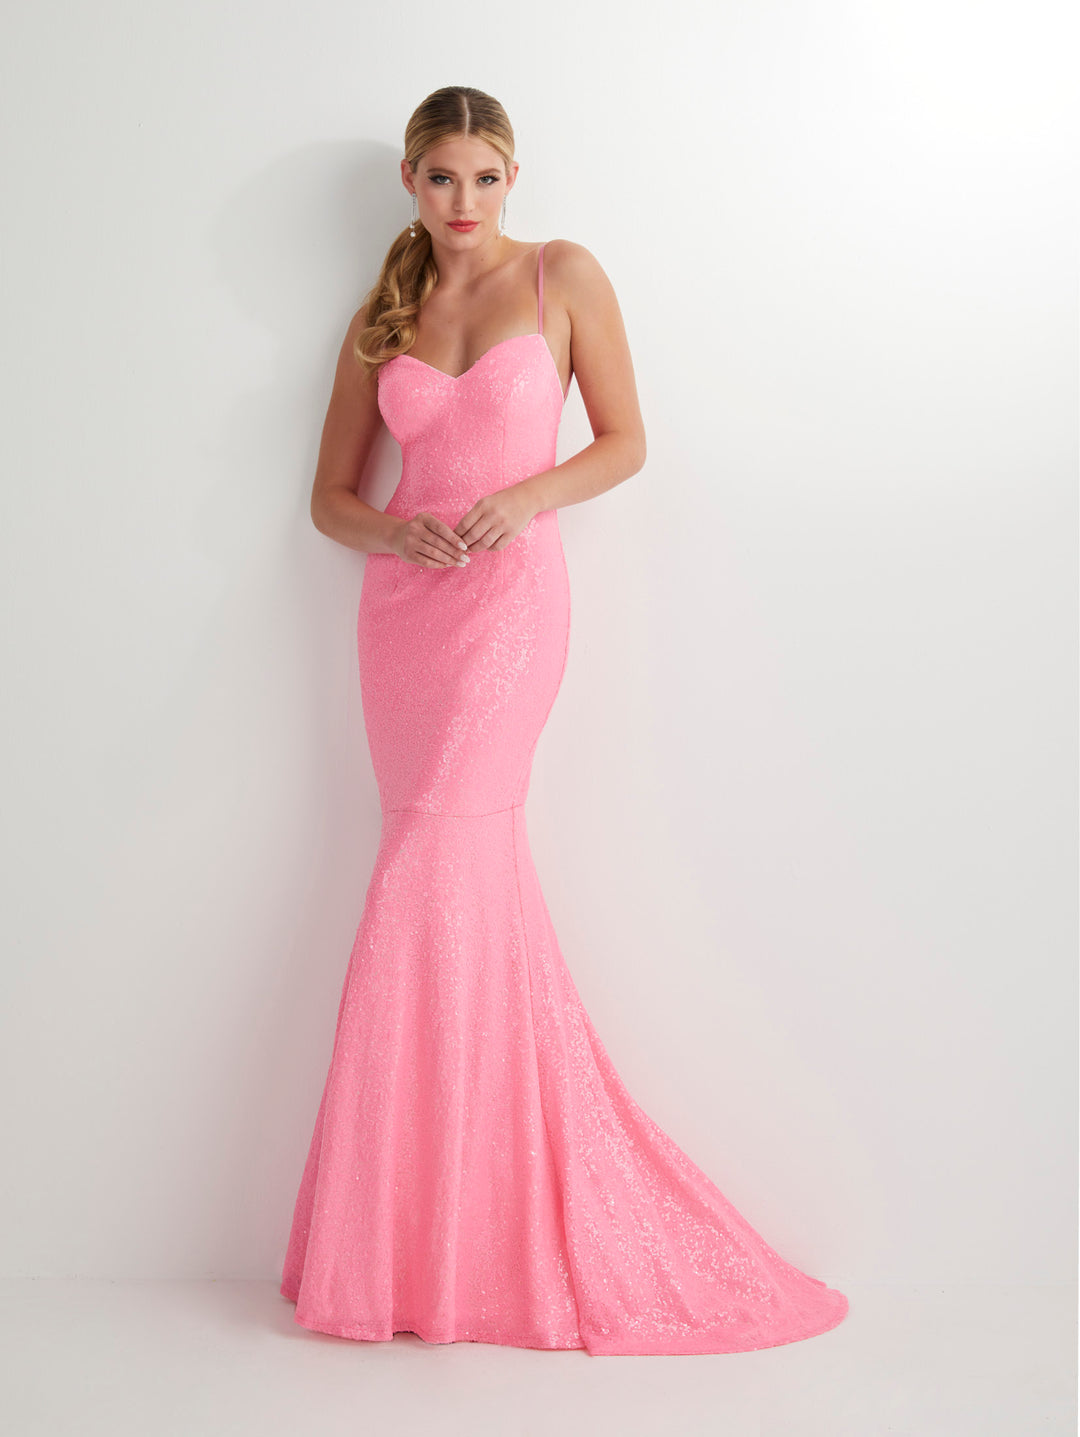 Sequin Sleeveless Sweetheart Mermaid Dress by Studio 17 12912